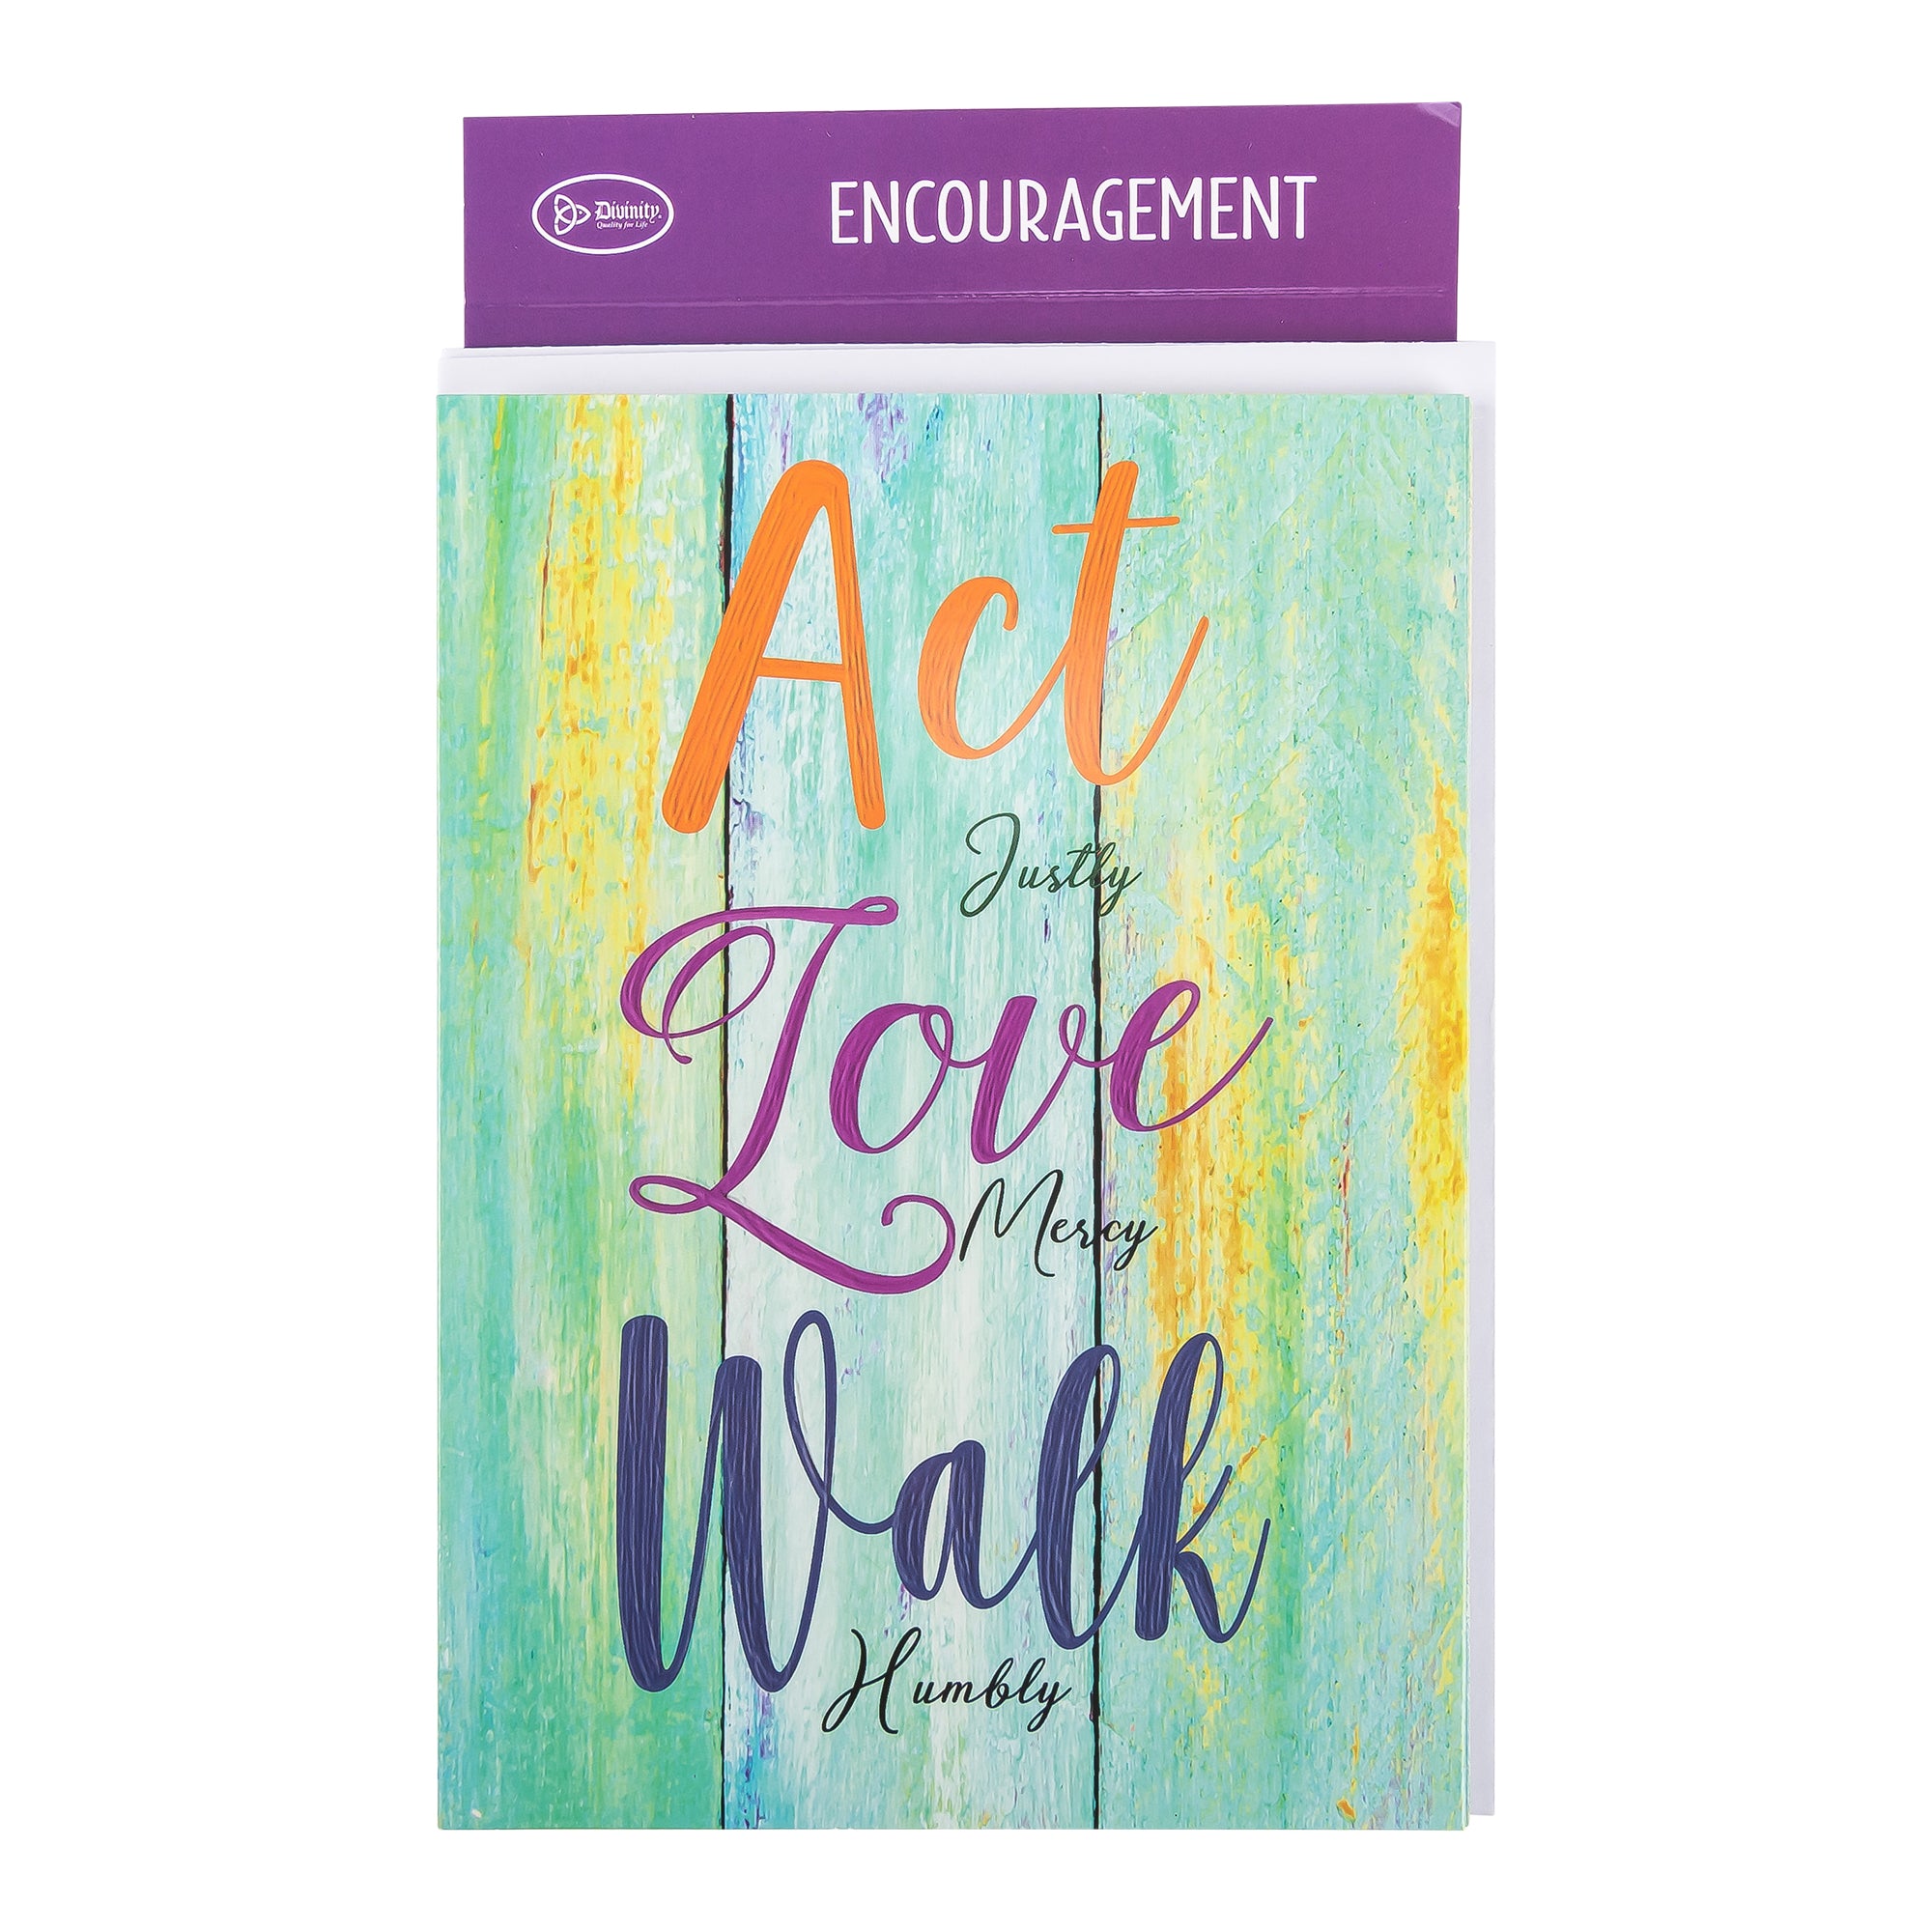 Single Cards - Encouragement - Act Micah 6:8 (6 pk)